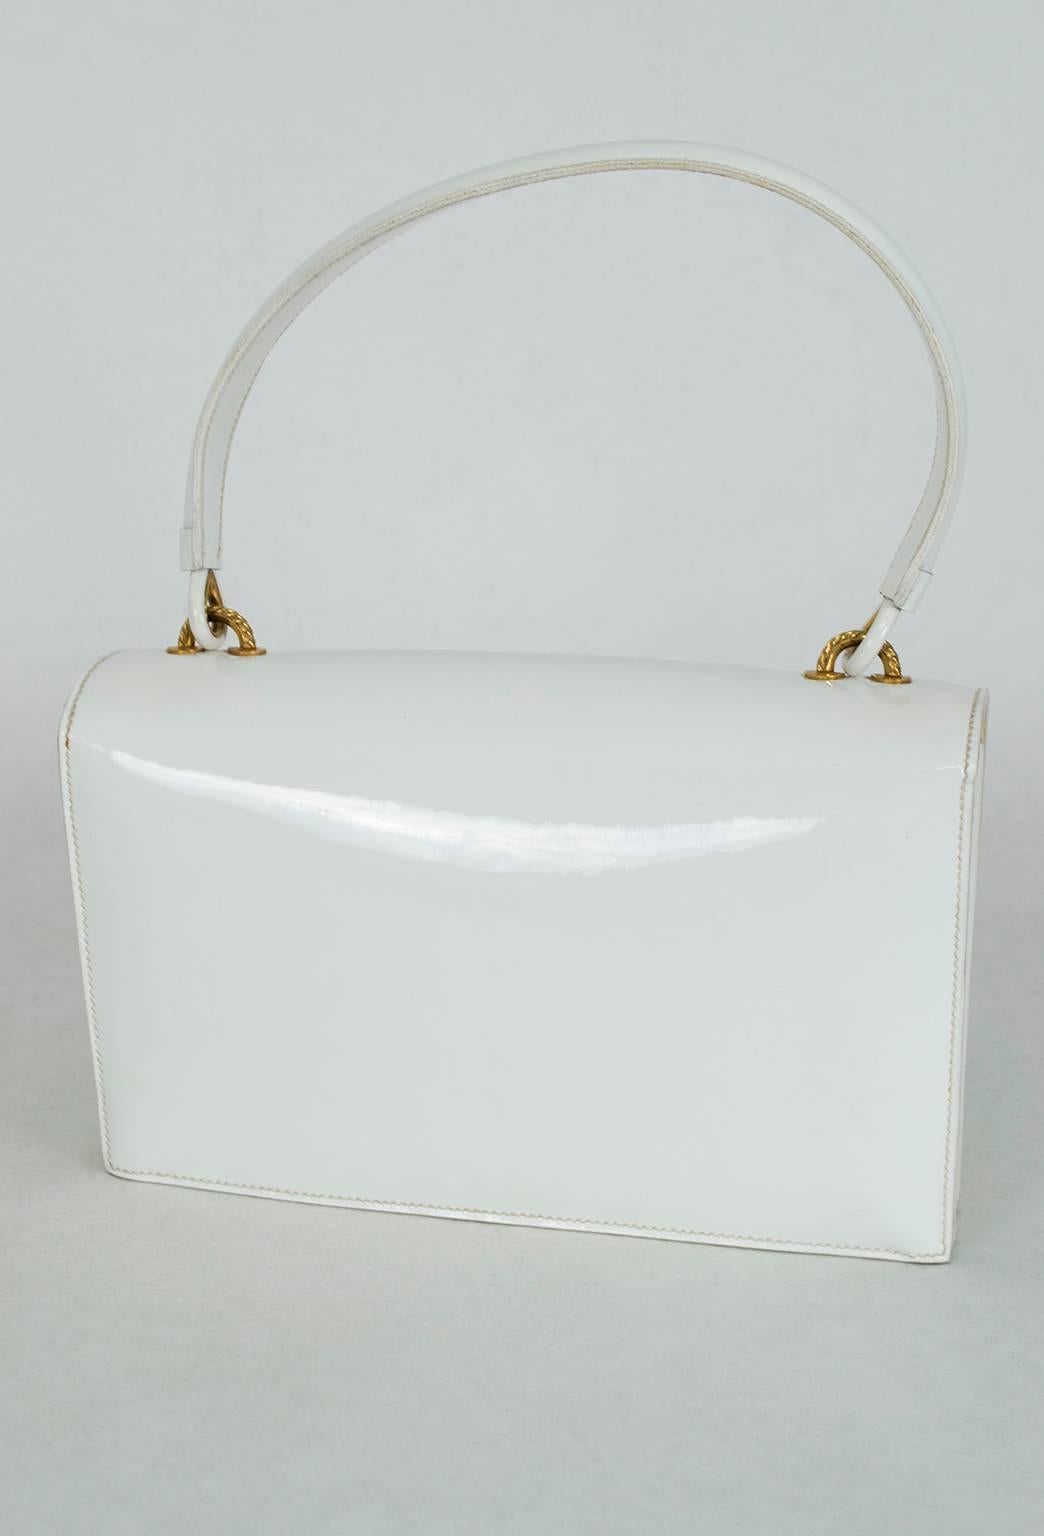 Vintage Hermès Sac Cordelière White Patent Leather Envelope Handbag- 25 cm, 1951 In Good Condition For Sale In Tucson, AZ